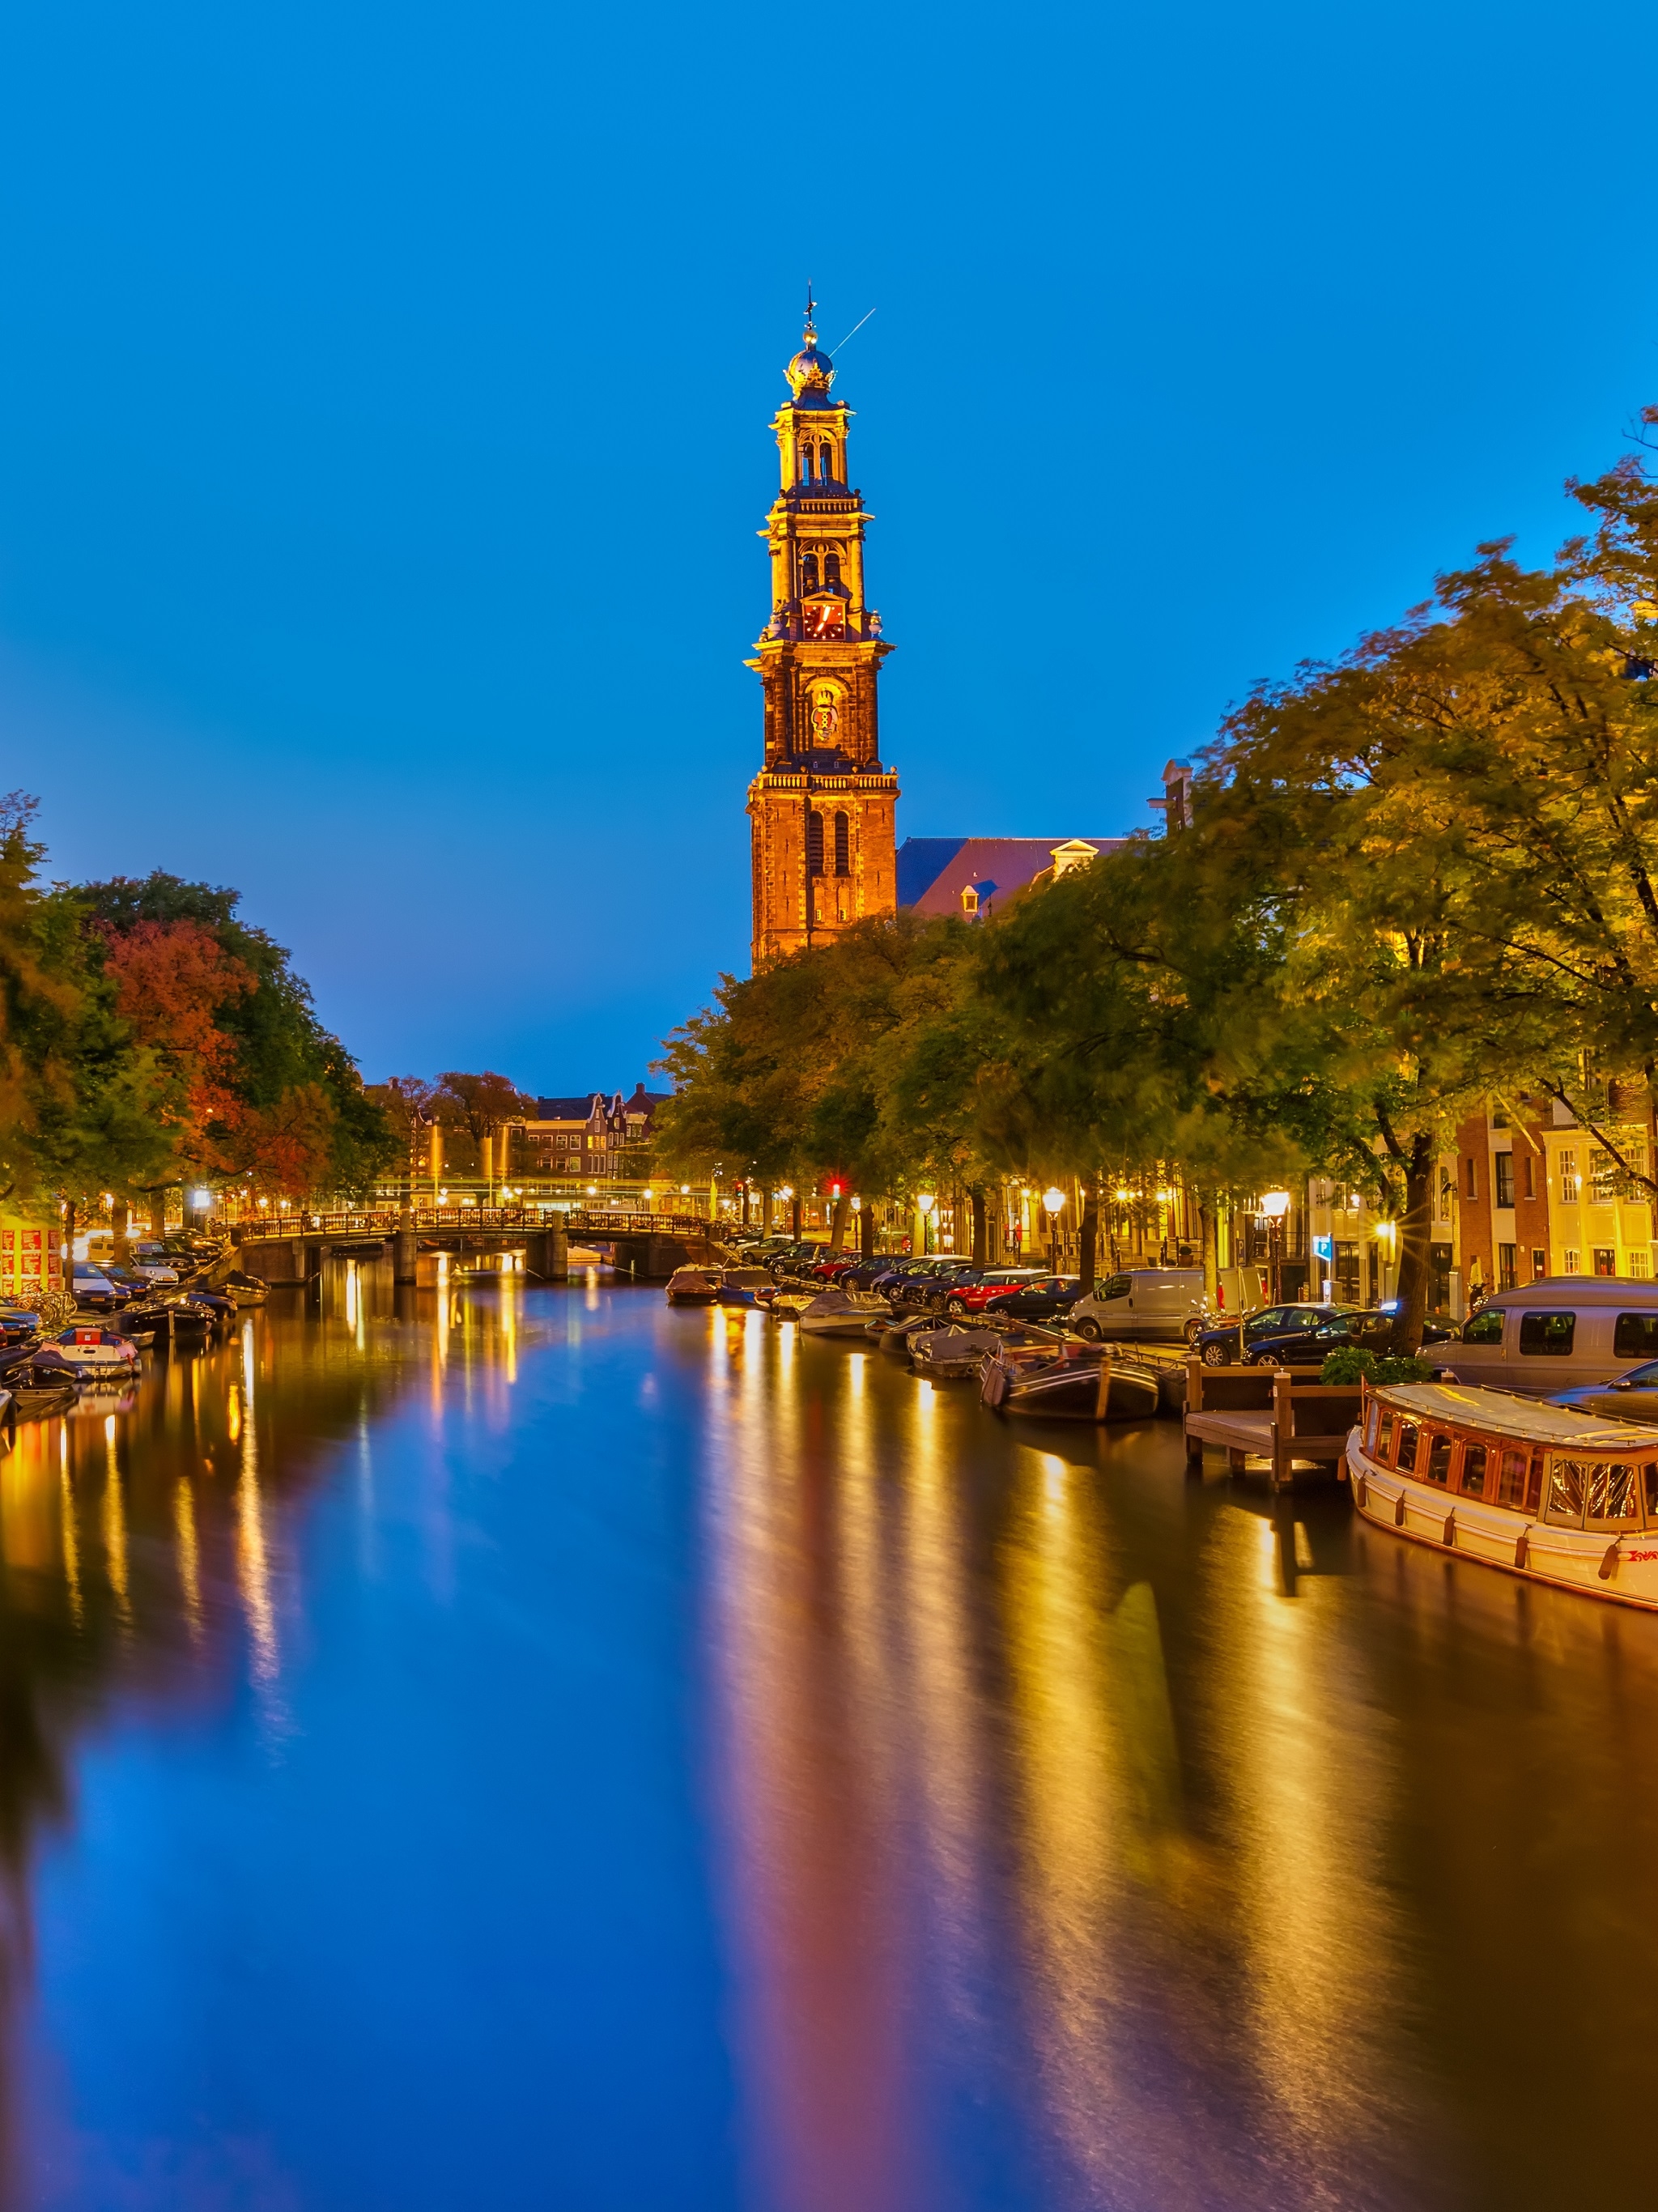 Amsterdam Netherlands for Apple iPad Pro resolution